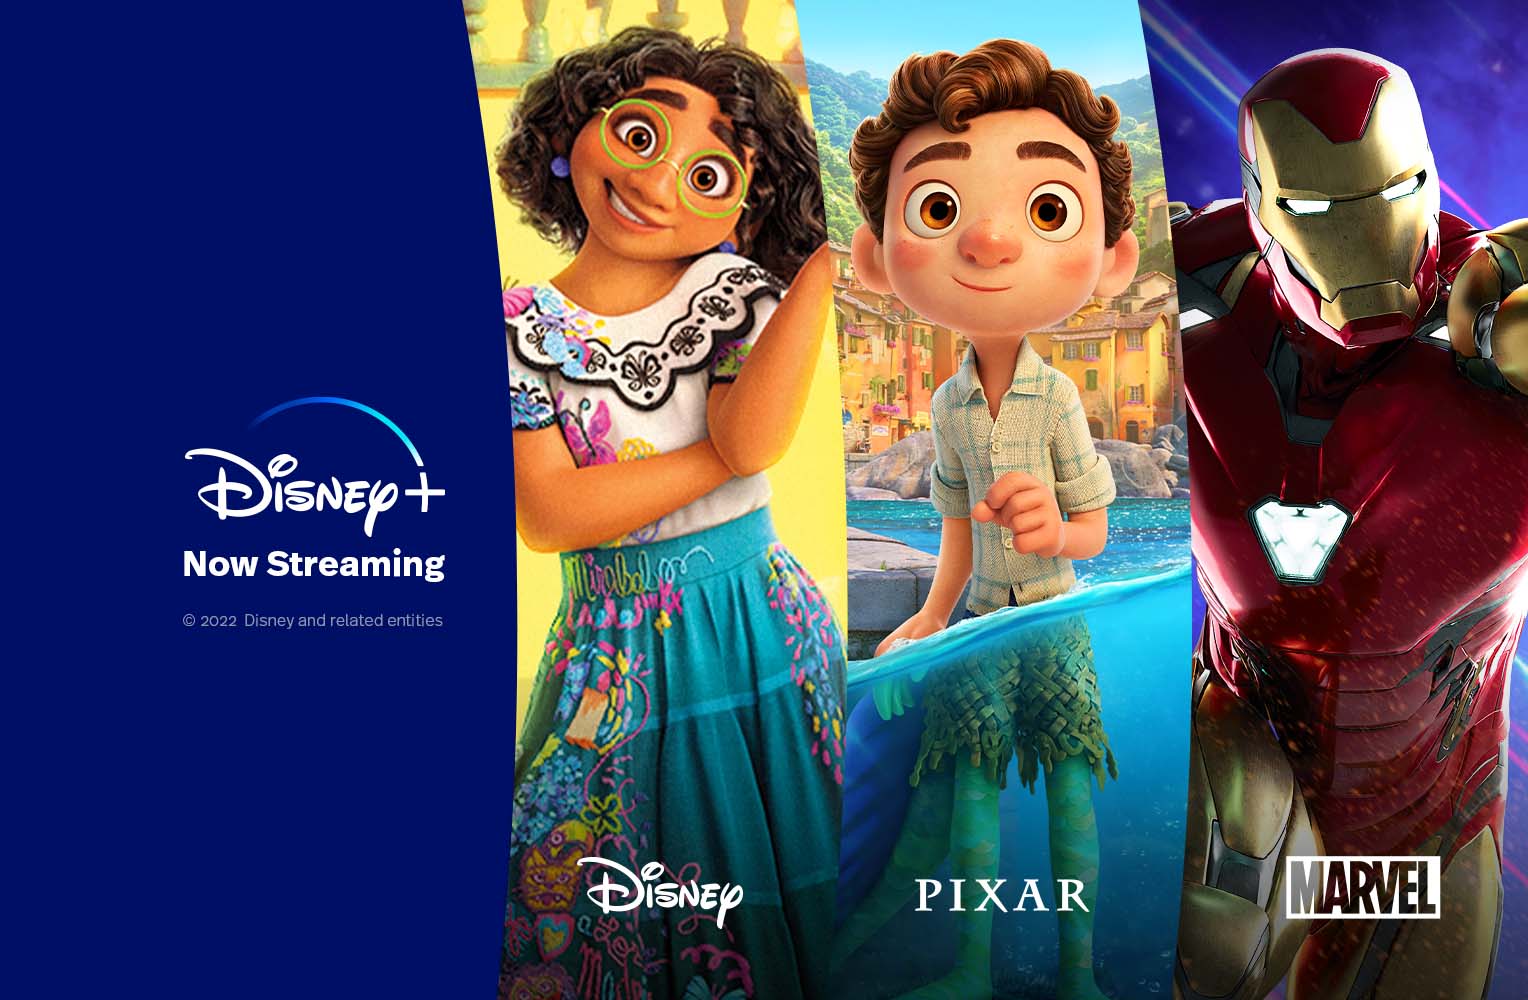 Disney+ now streaming Disney, Pixar & Marvel